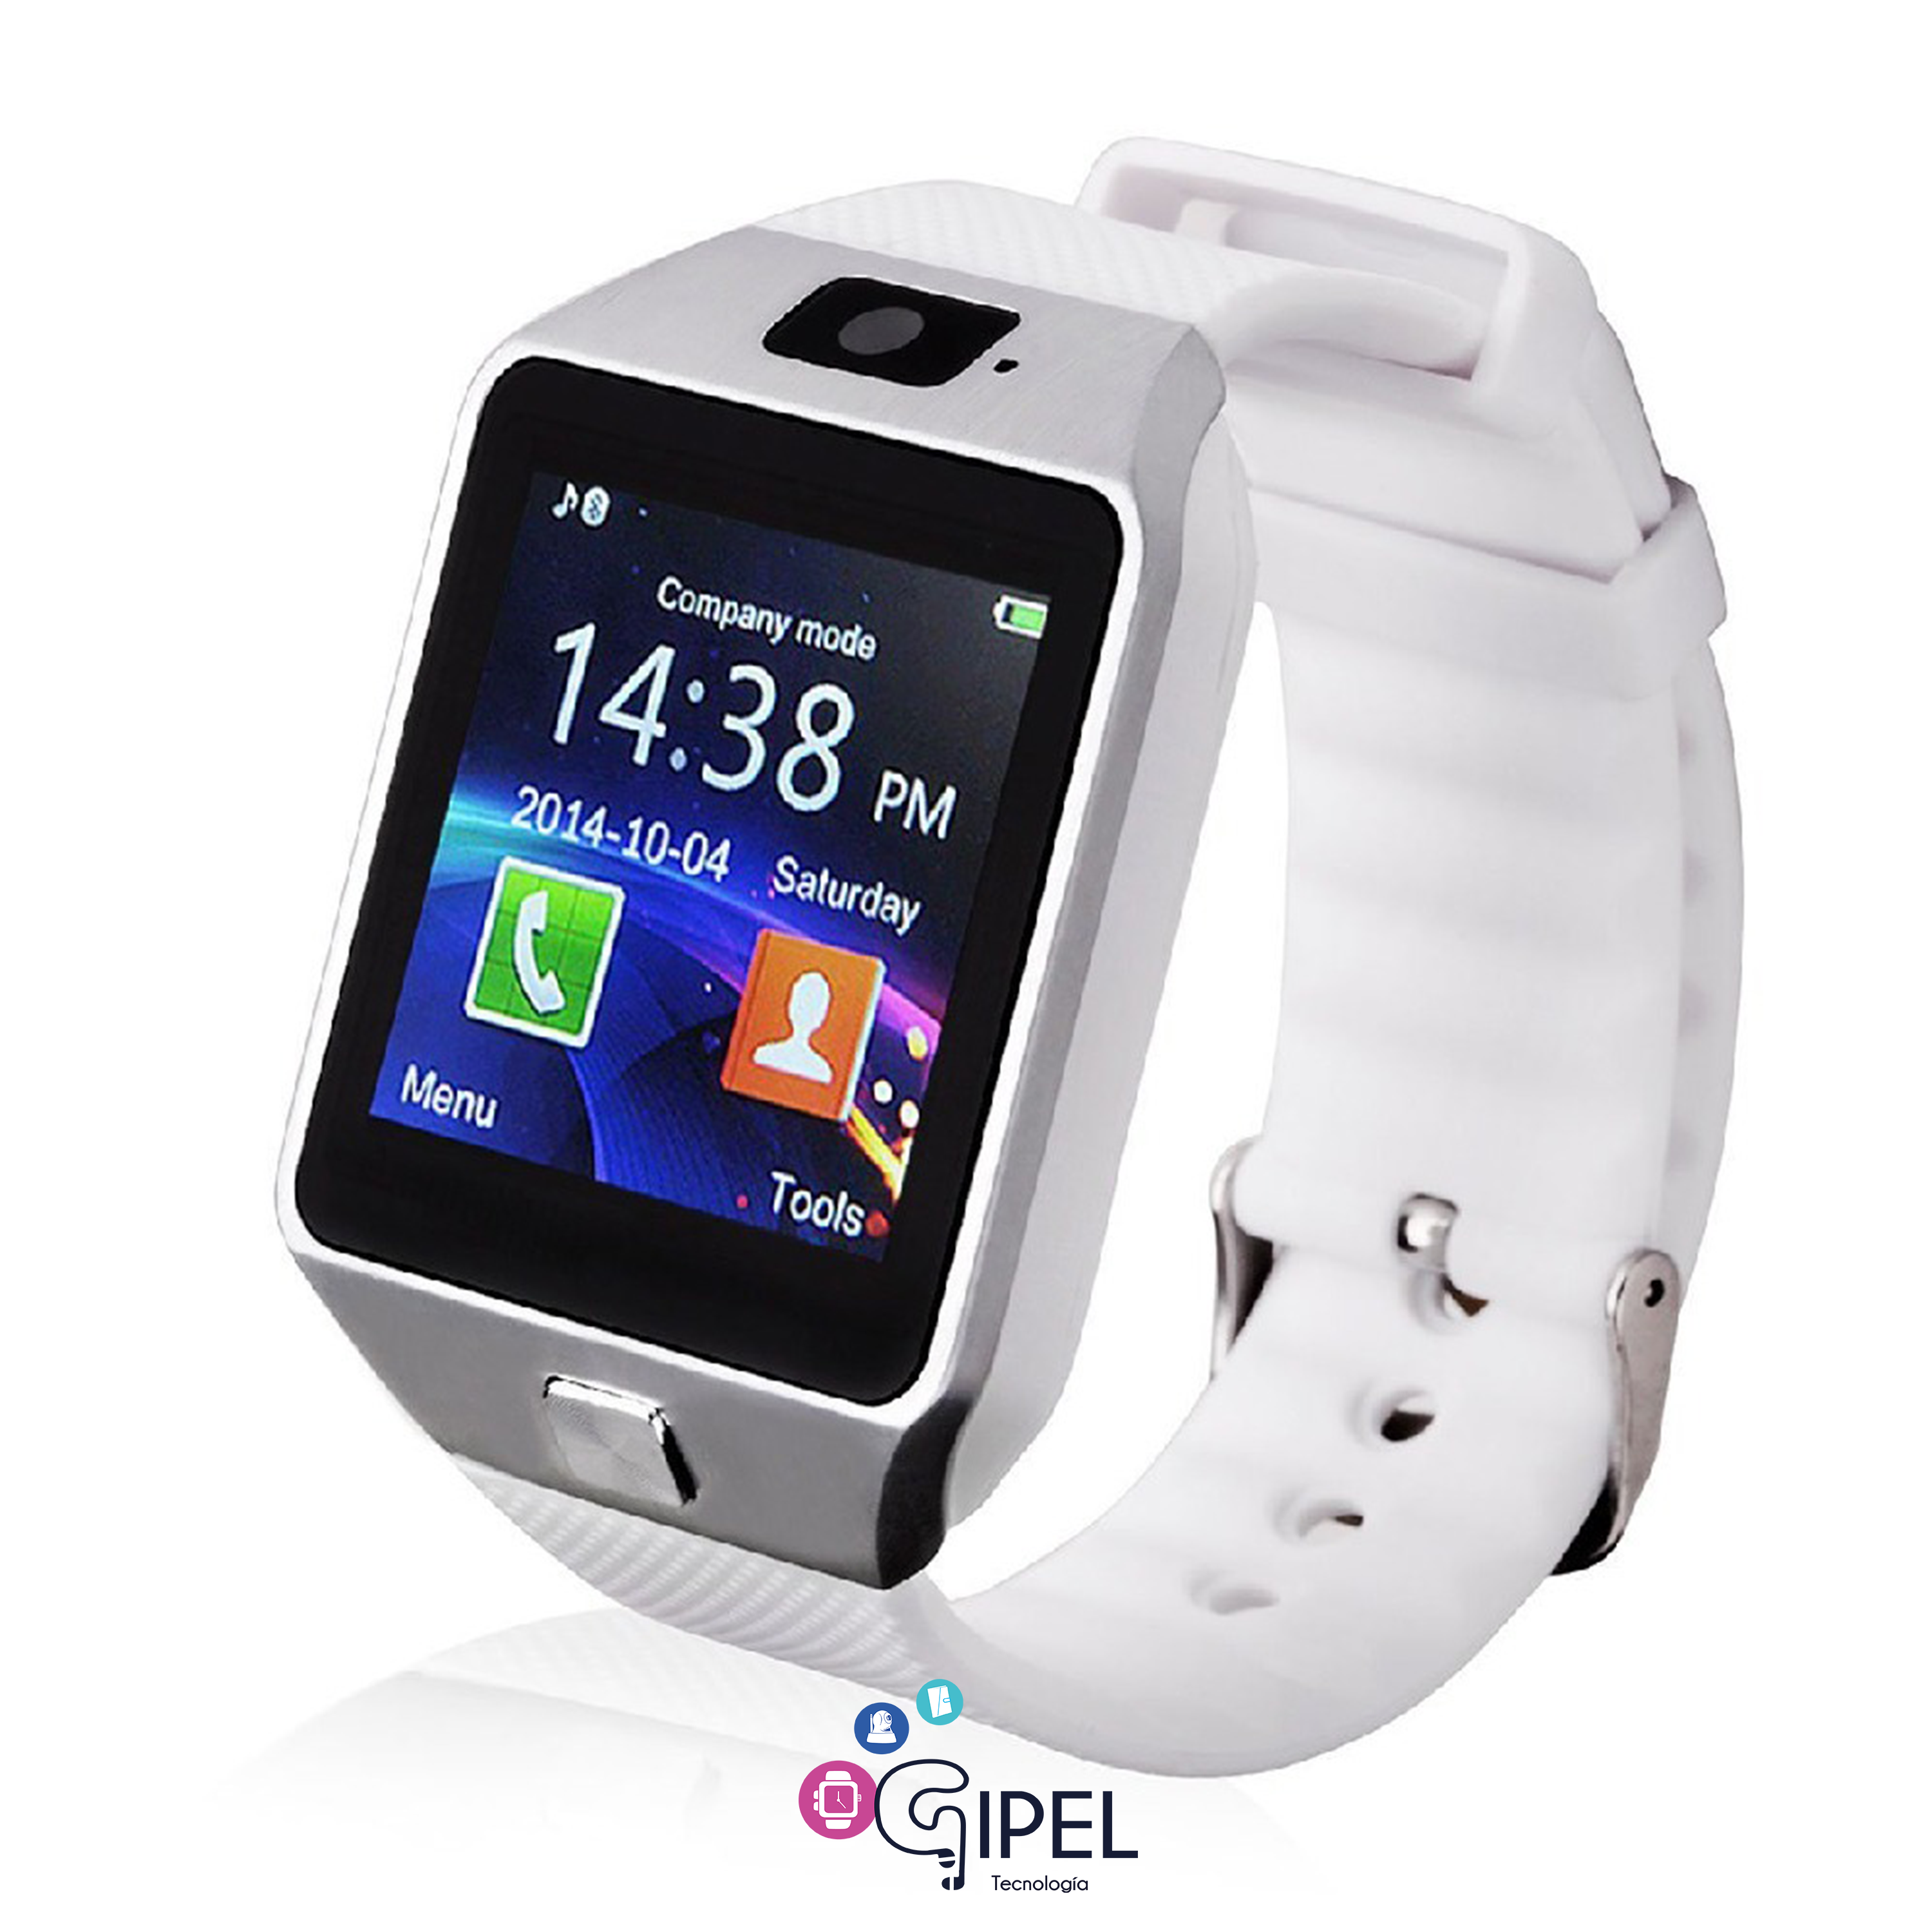 Smartwatch Reloj Inteligente via Chip Bluetooth toma fotografÍas